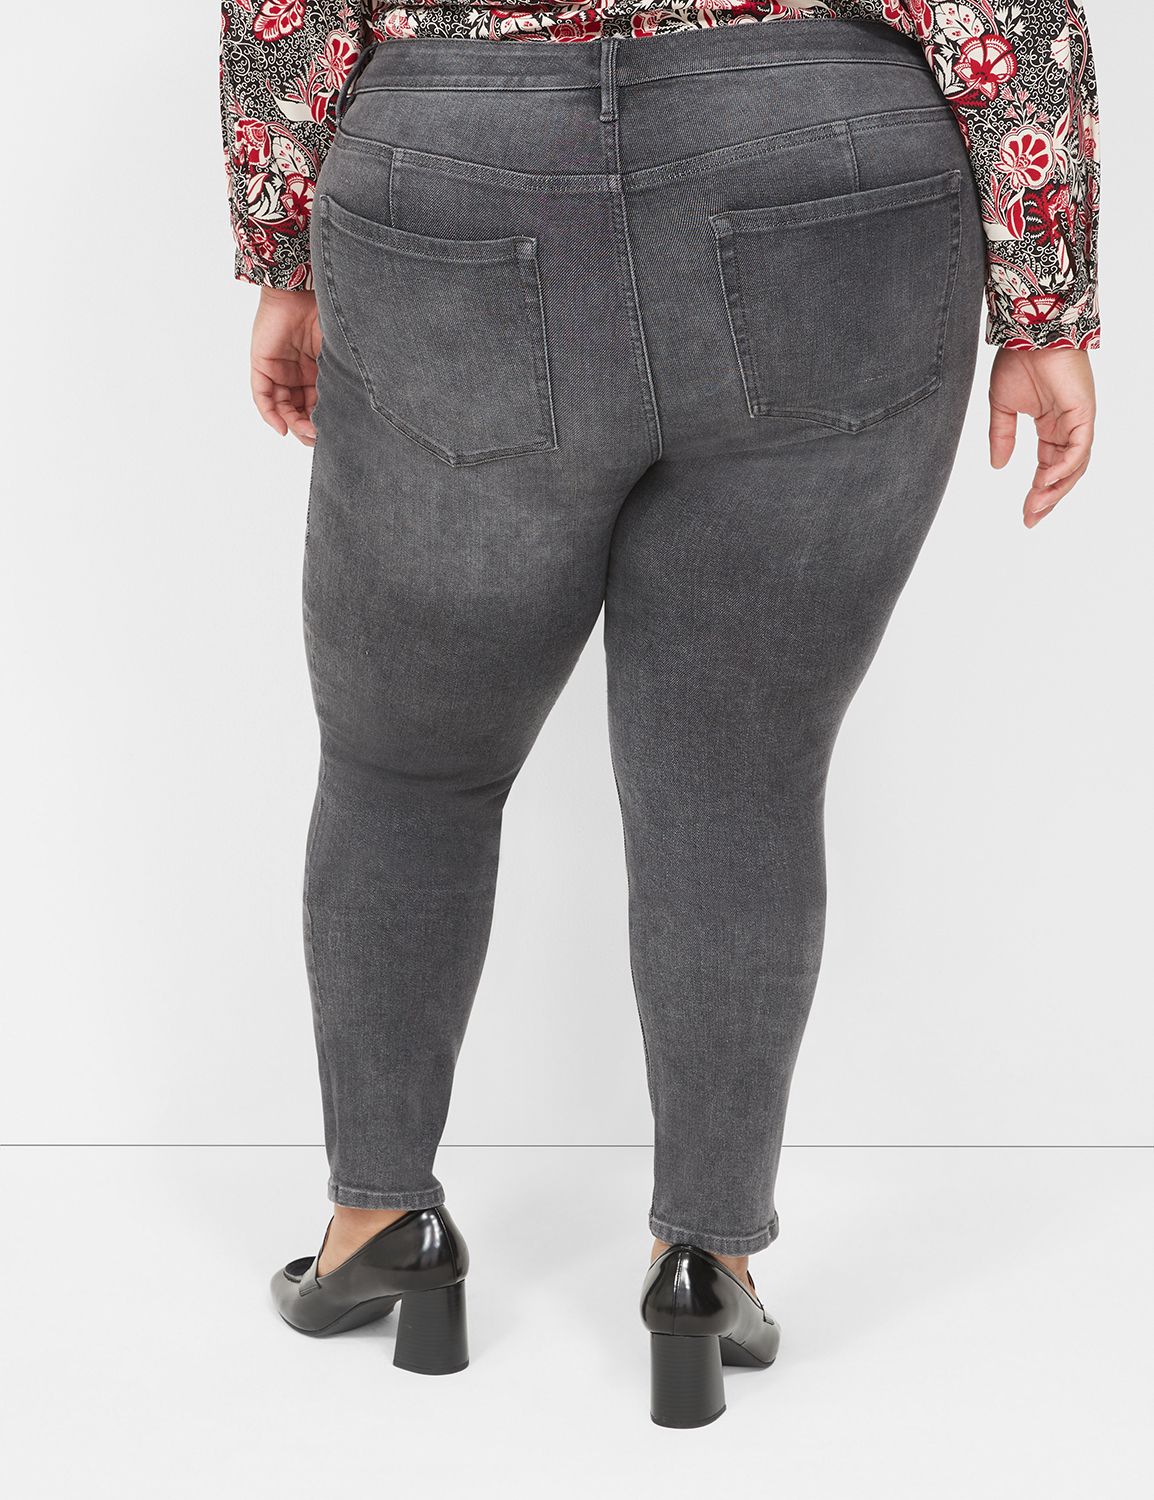 SPANX Gray Denim Jegging Skinny Size MEDIUM (M) Jeans